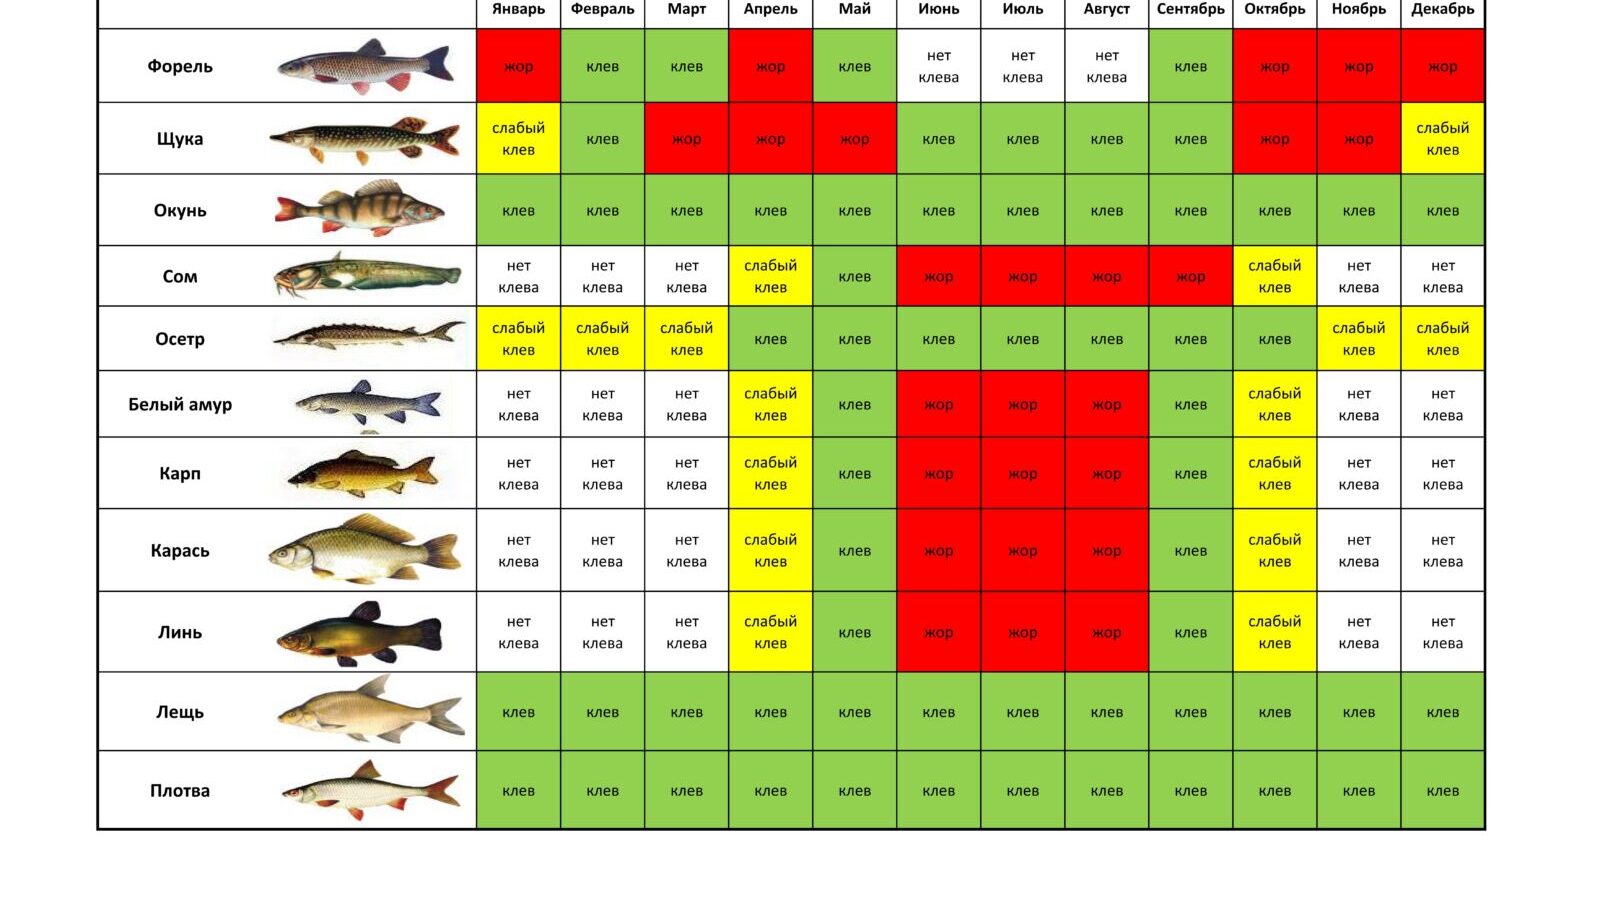 Календарь рыболова (прогноз клёва) - это миф или правда? Давайте подробно разберемся